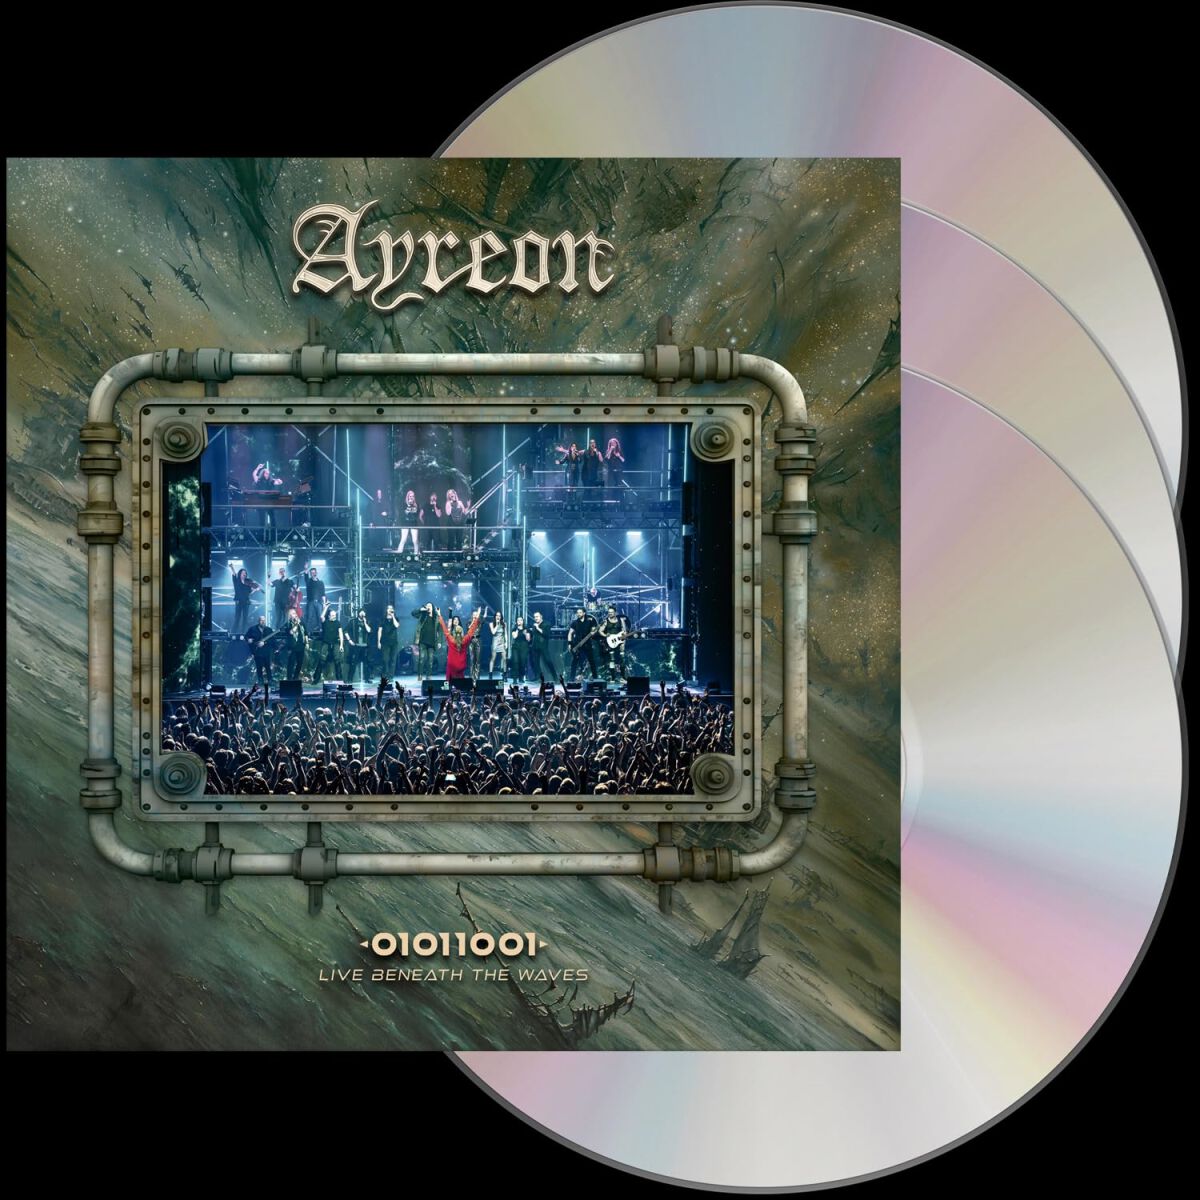 Levně Ayreon 01011001 - Live beneath the waves DVD & 2-CD standard